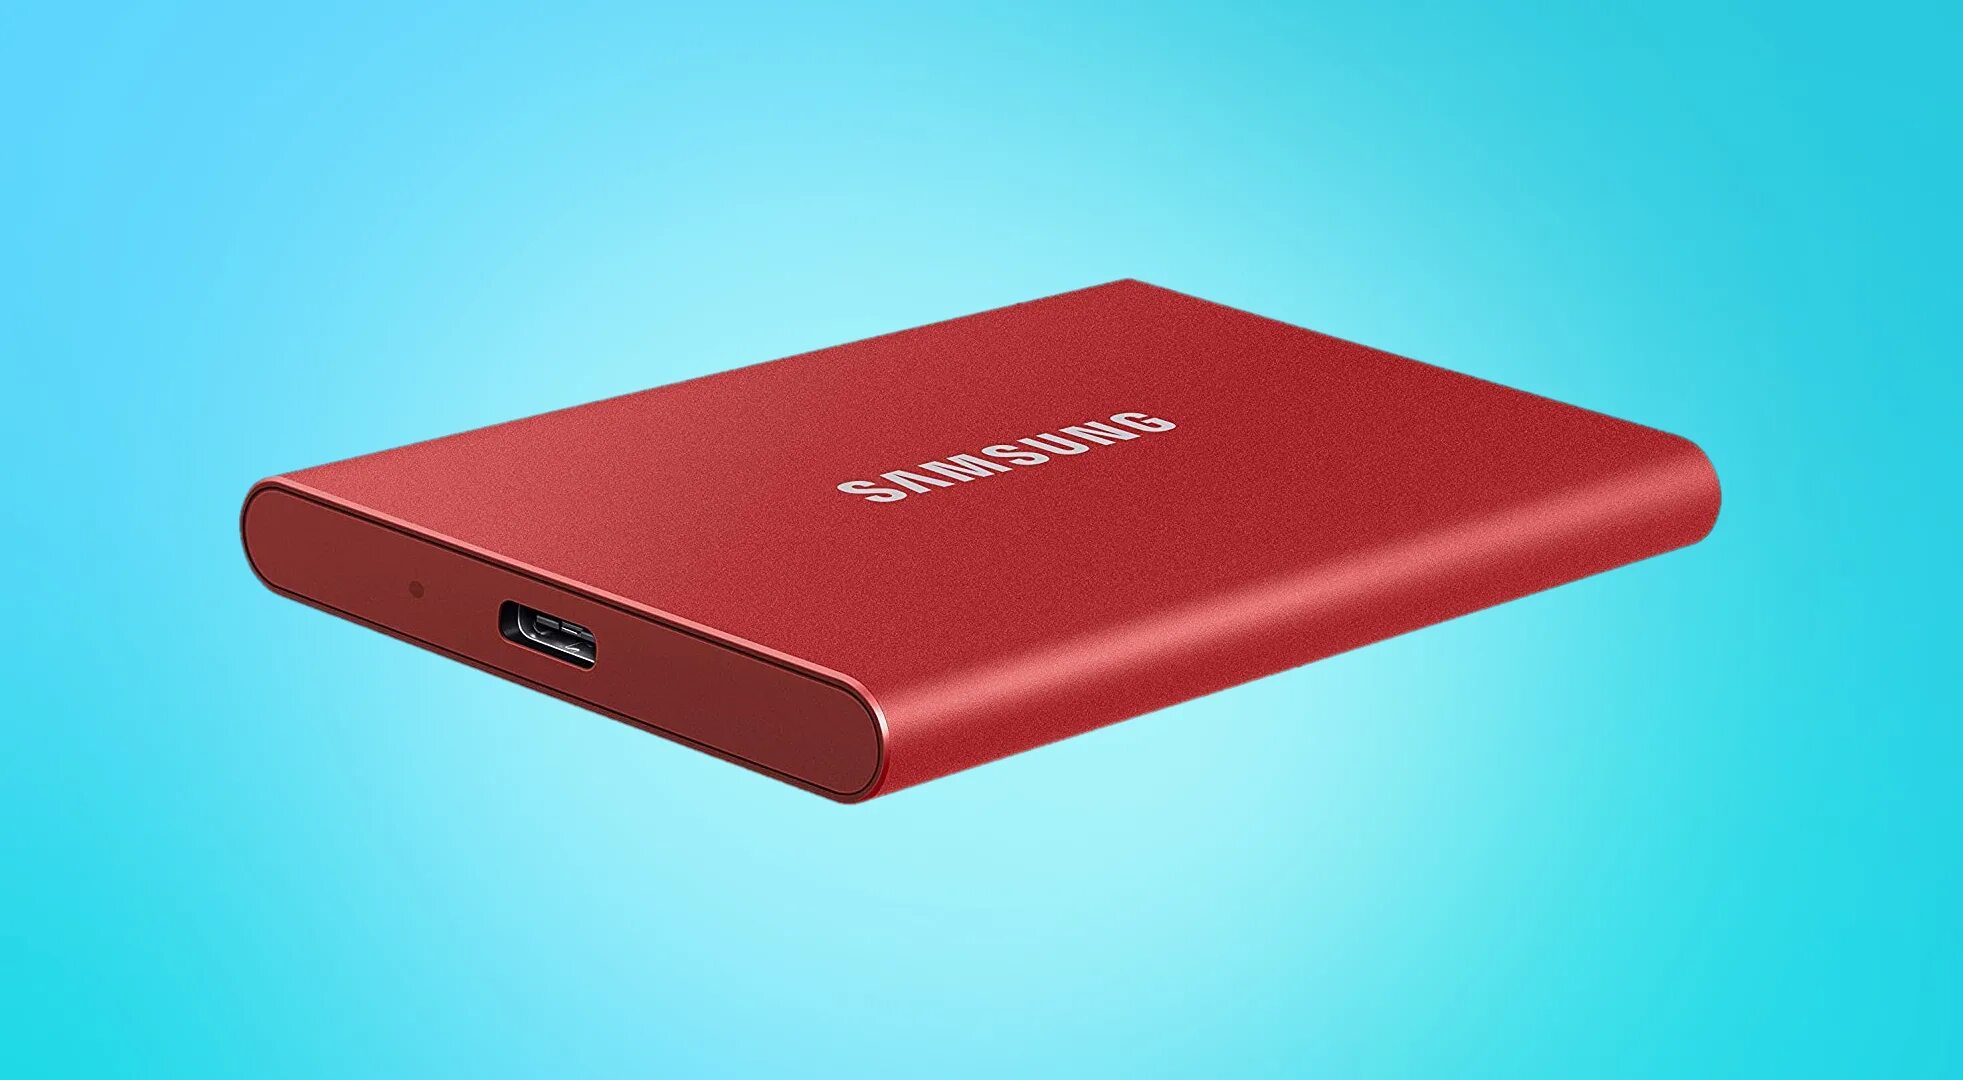 Samsung t7 ssd купить. SSD Samsung t7. Samsung External SSD t7. Samsung t7 Portable SSD 2tb. Samsung SSD t7 Red.